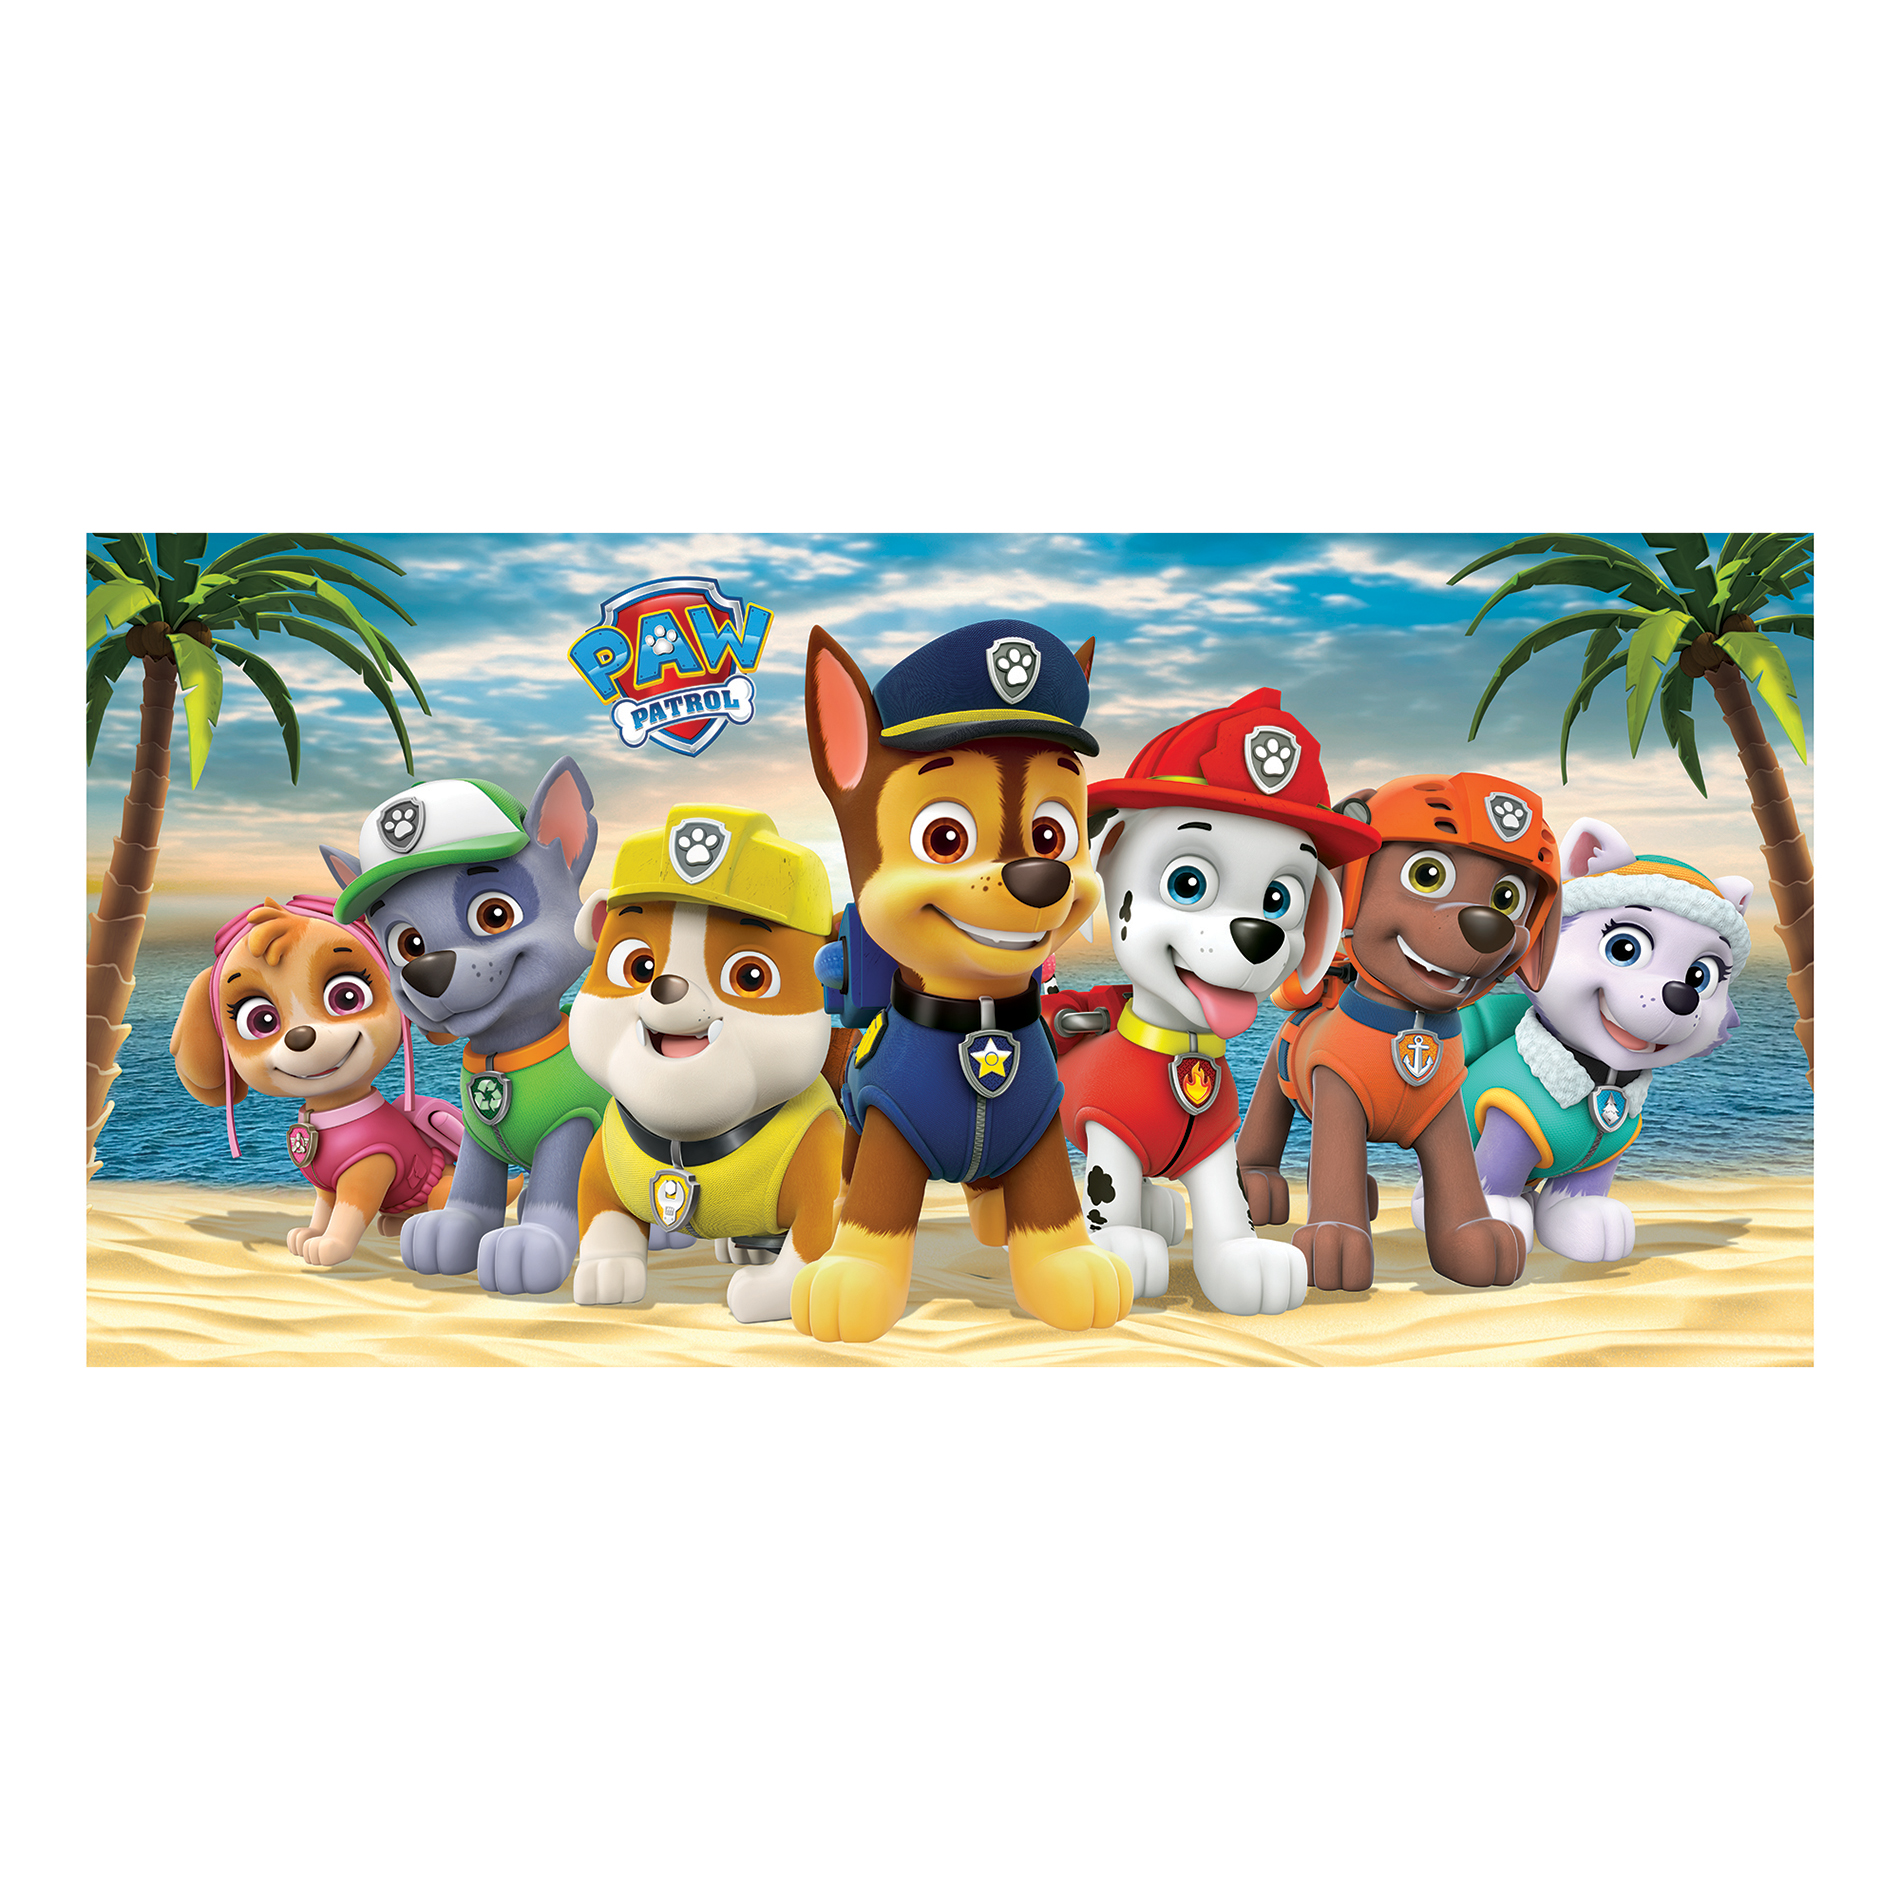 Nickelodeon Paw Patrol Make A Stand Beach Towel